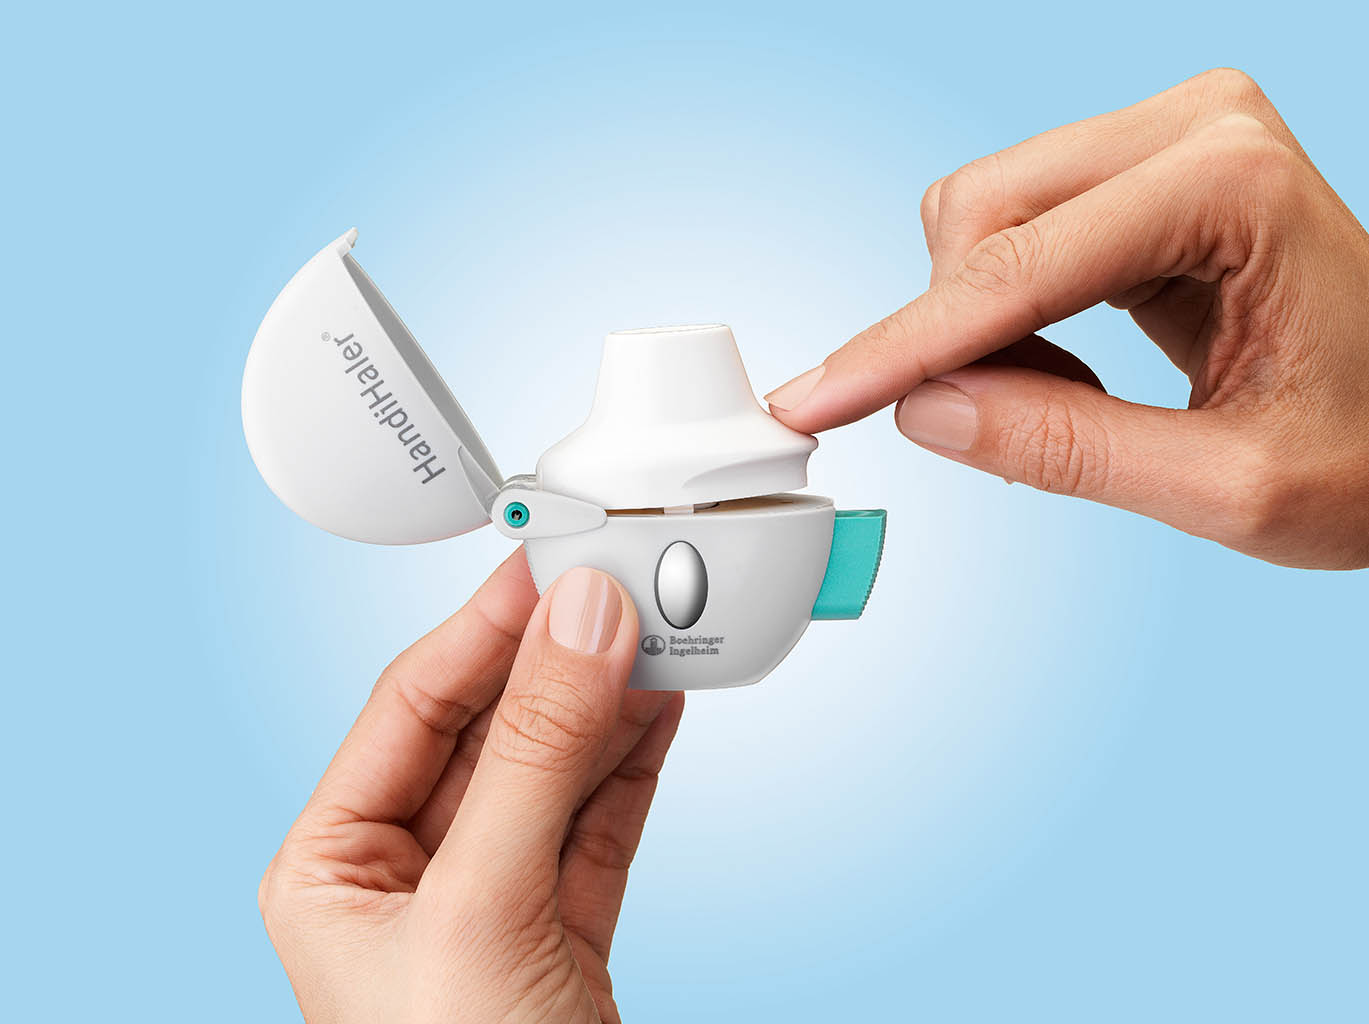 Still Life Product Photography of HandiHaler asthma inhaler by Packshot Factory